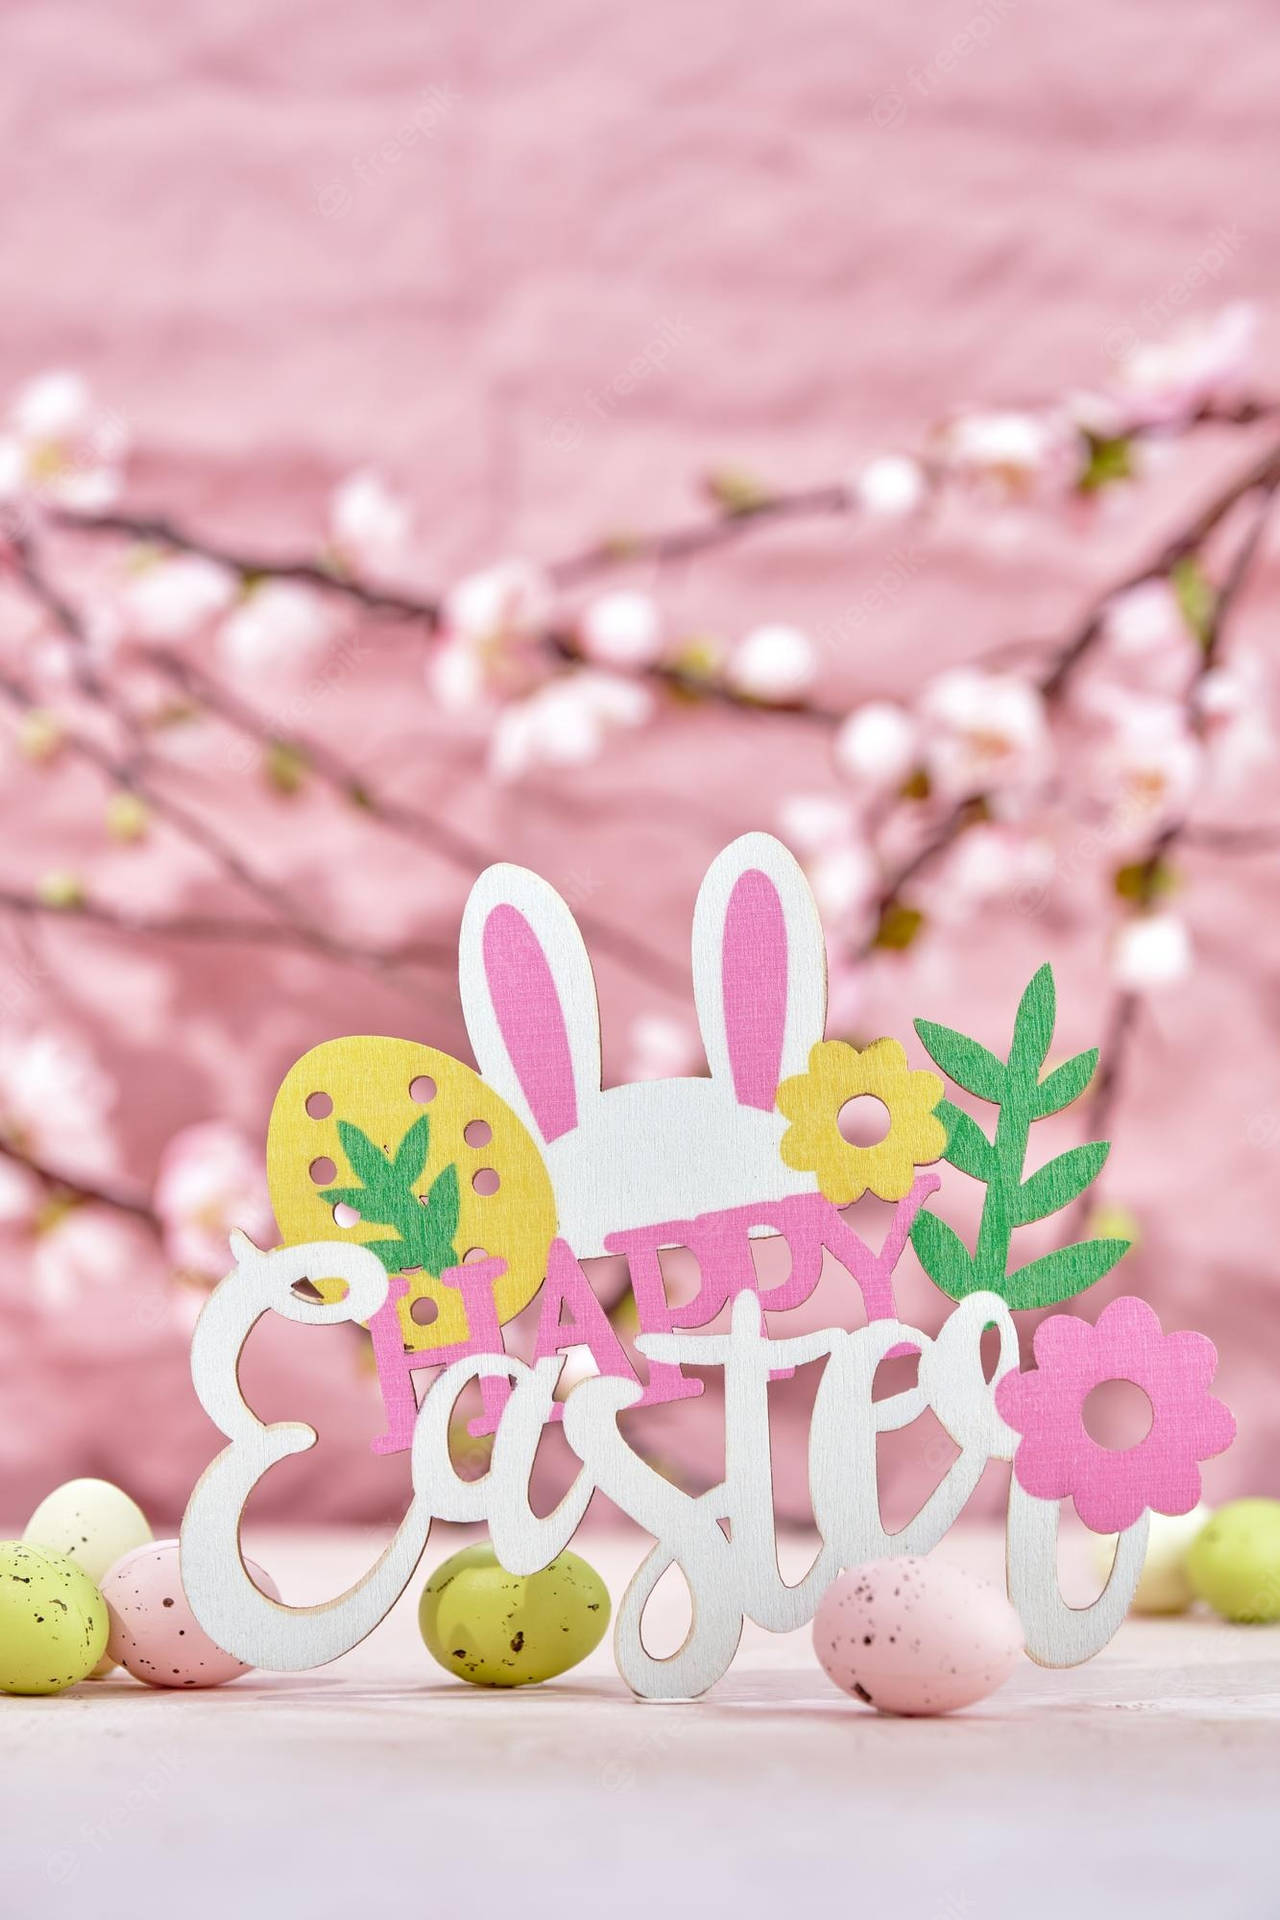 Easter Background Images  Free Download on Freepik